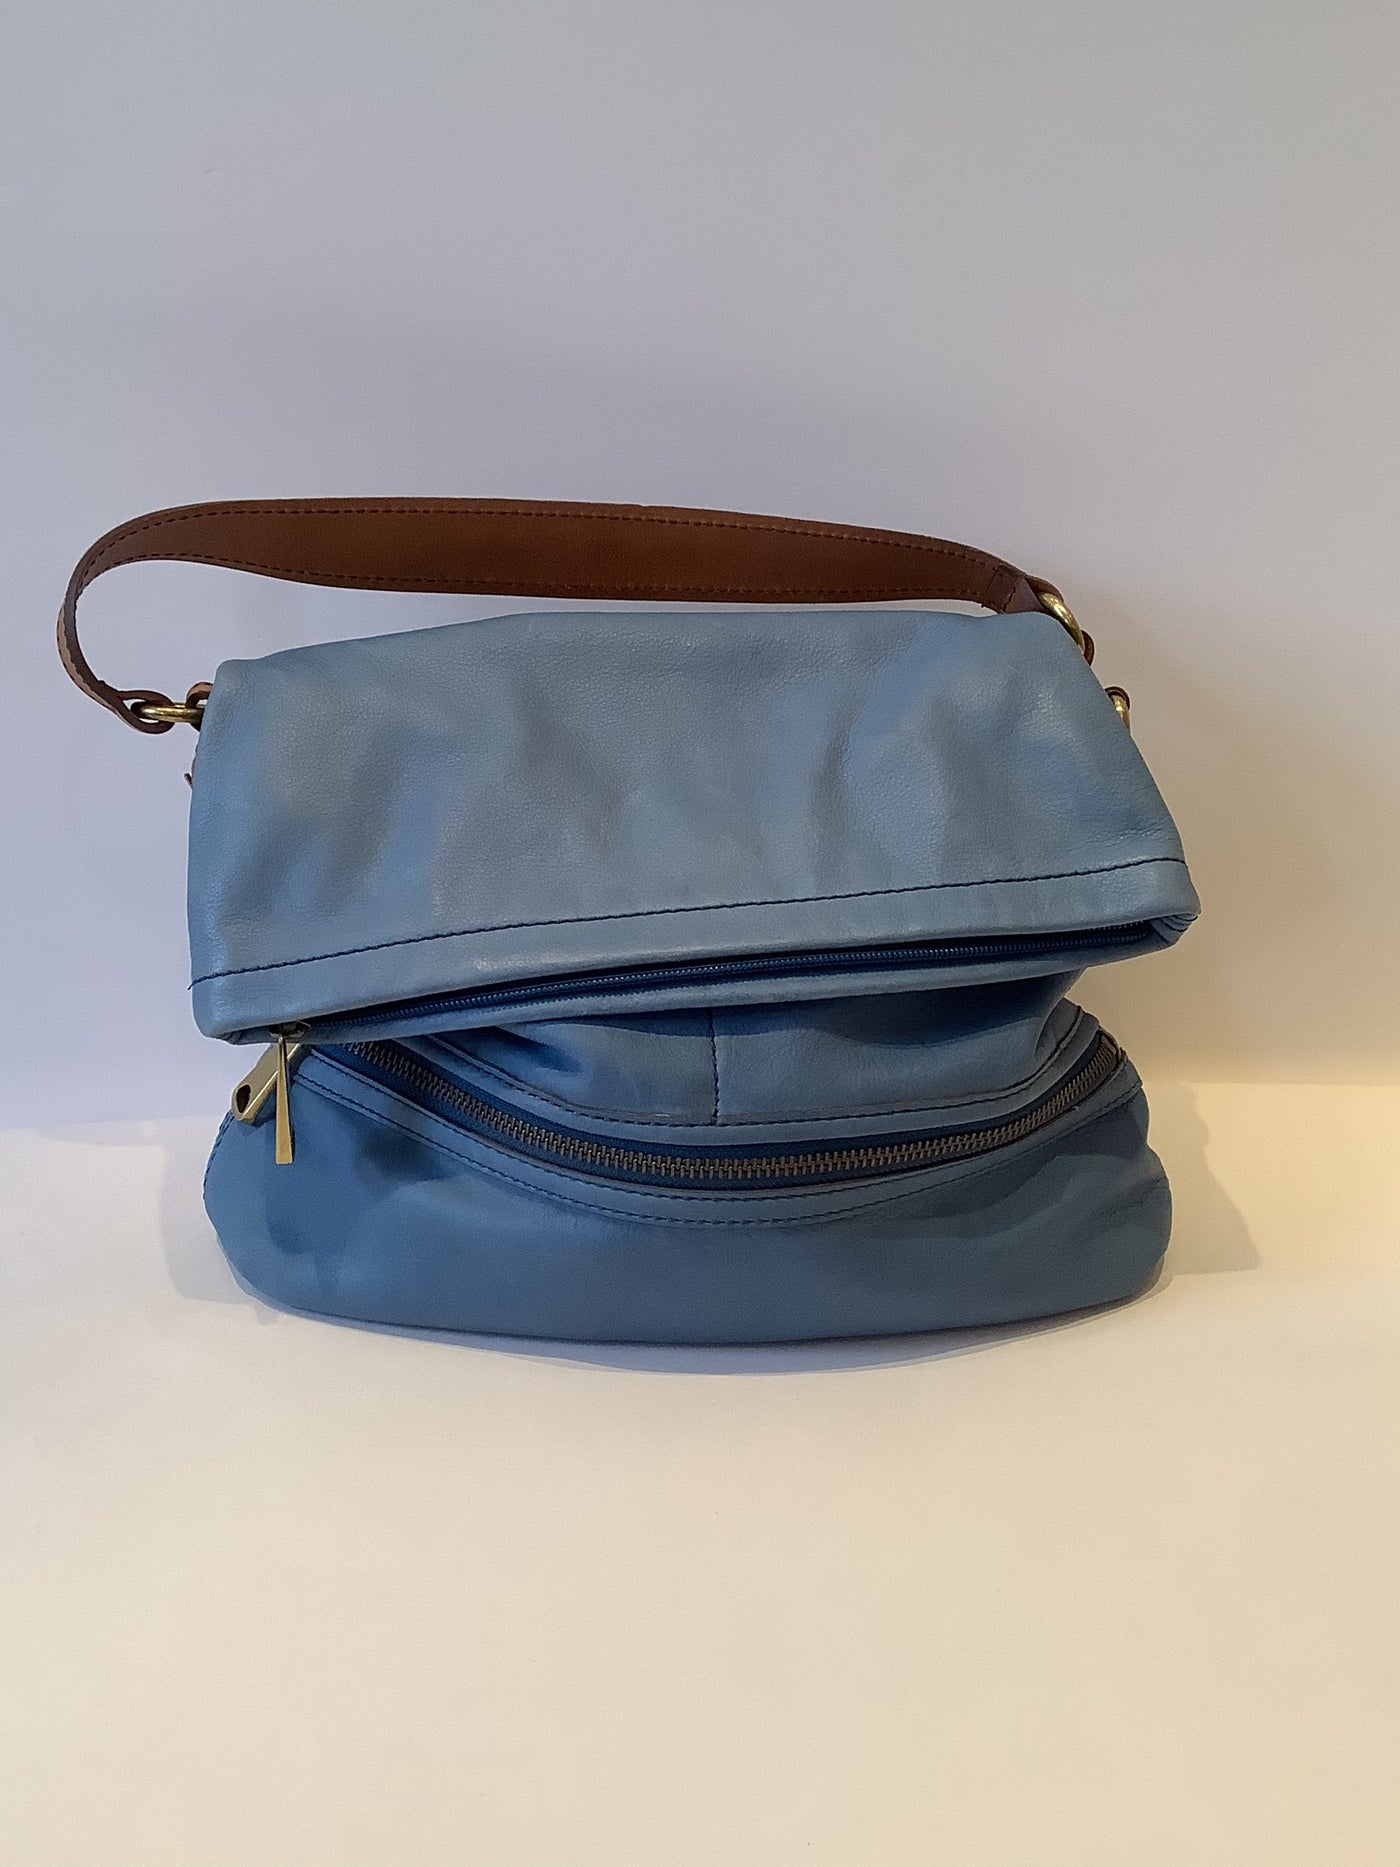 Fossil Blue Leather Handbag